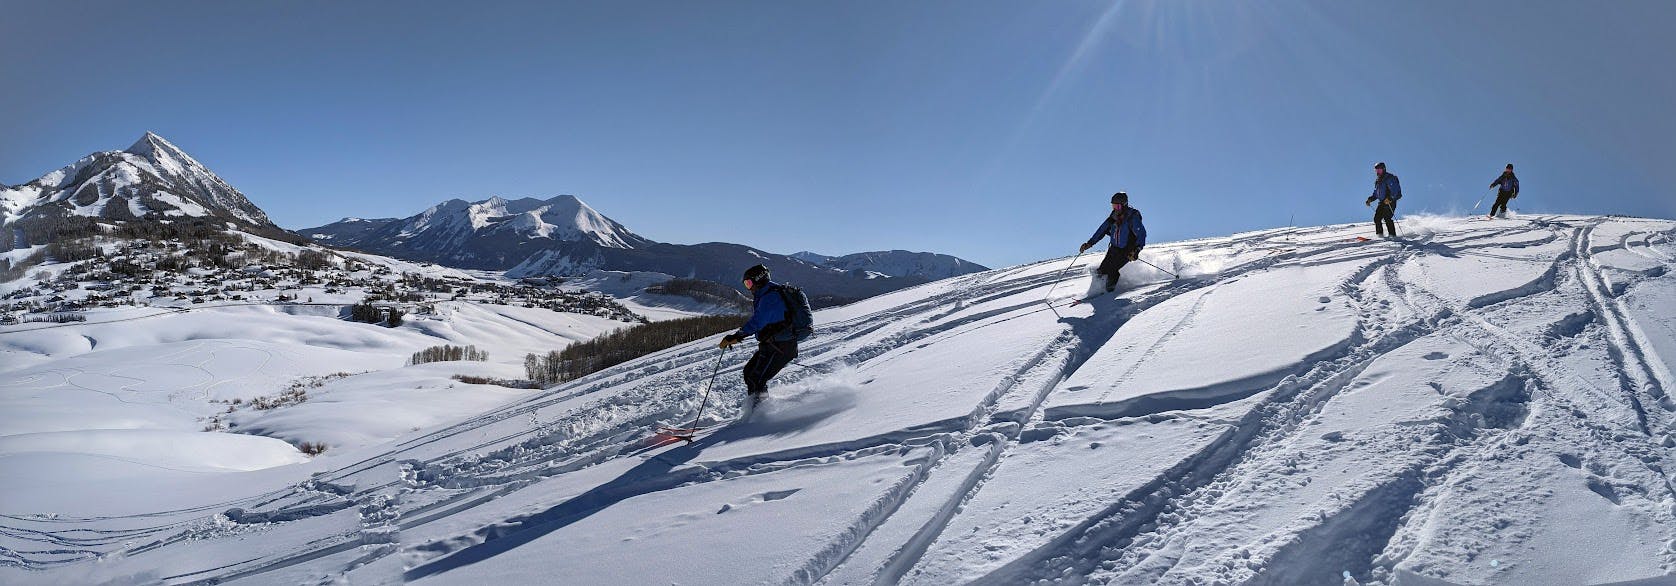 Choosing the Right Ski Waist Width